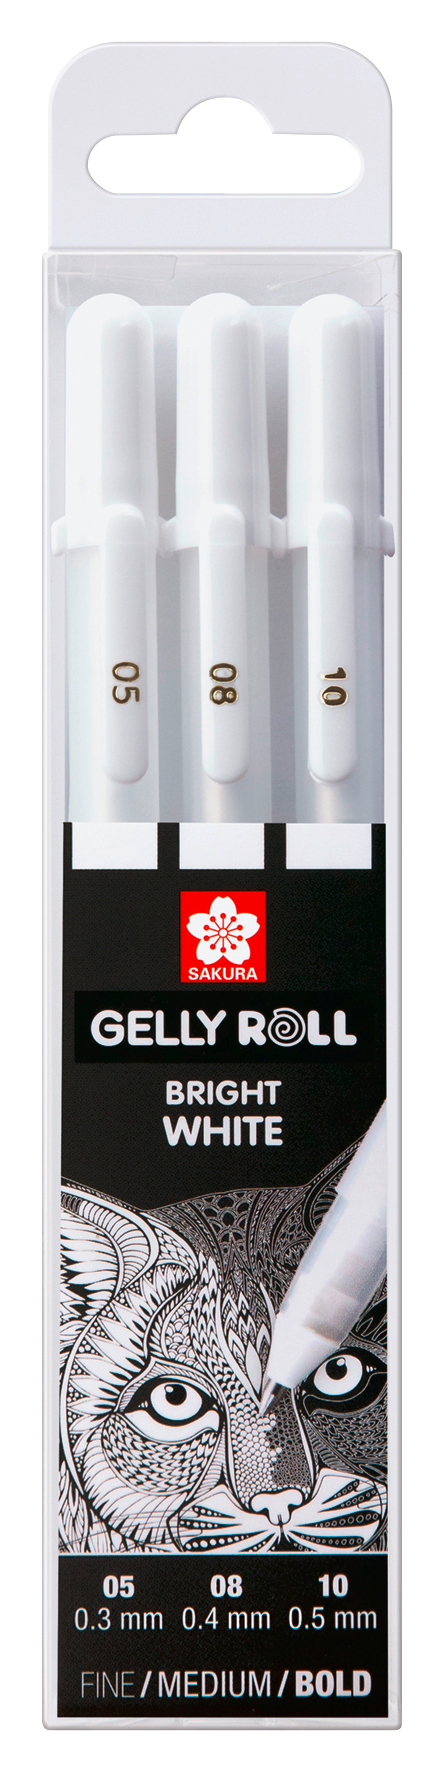 SAKURA Gelly Roll 0.3/0.4/0.5mm POXPGBWH3C White 3 pcs.